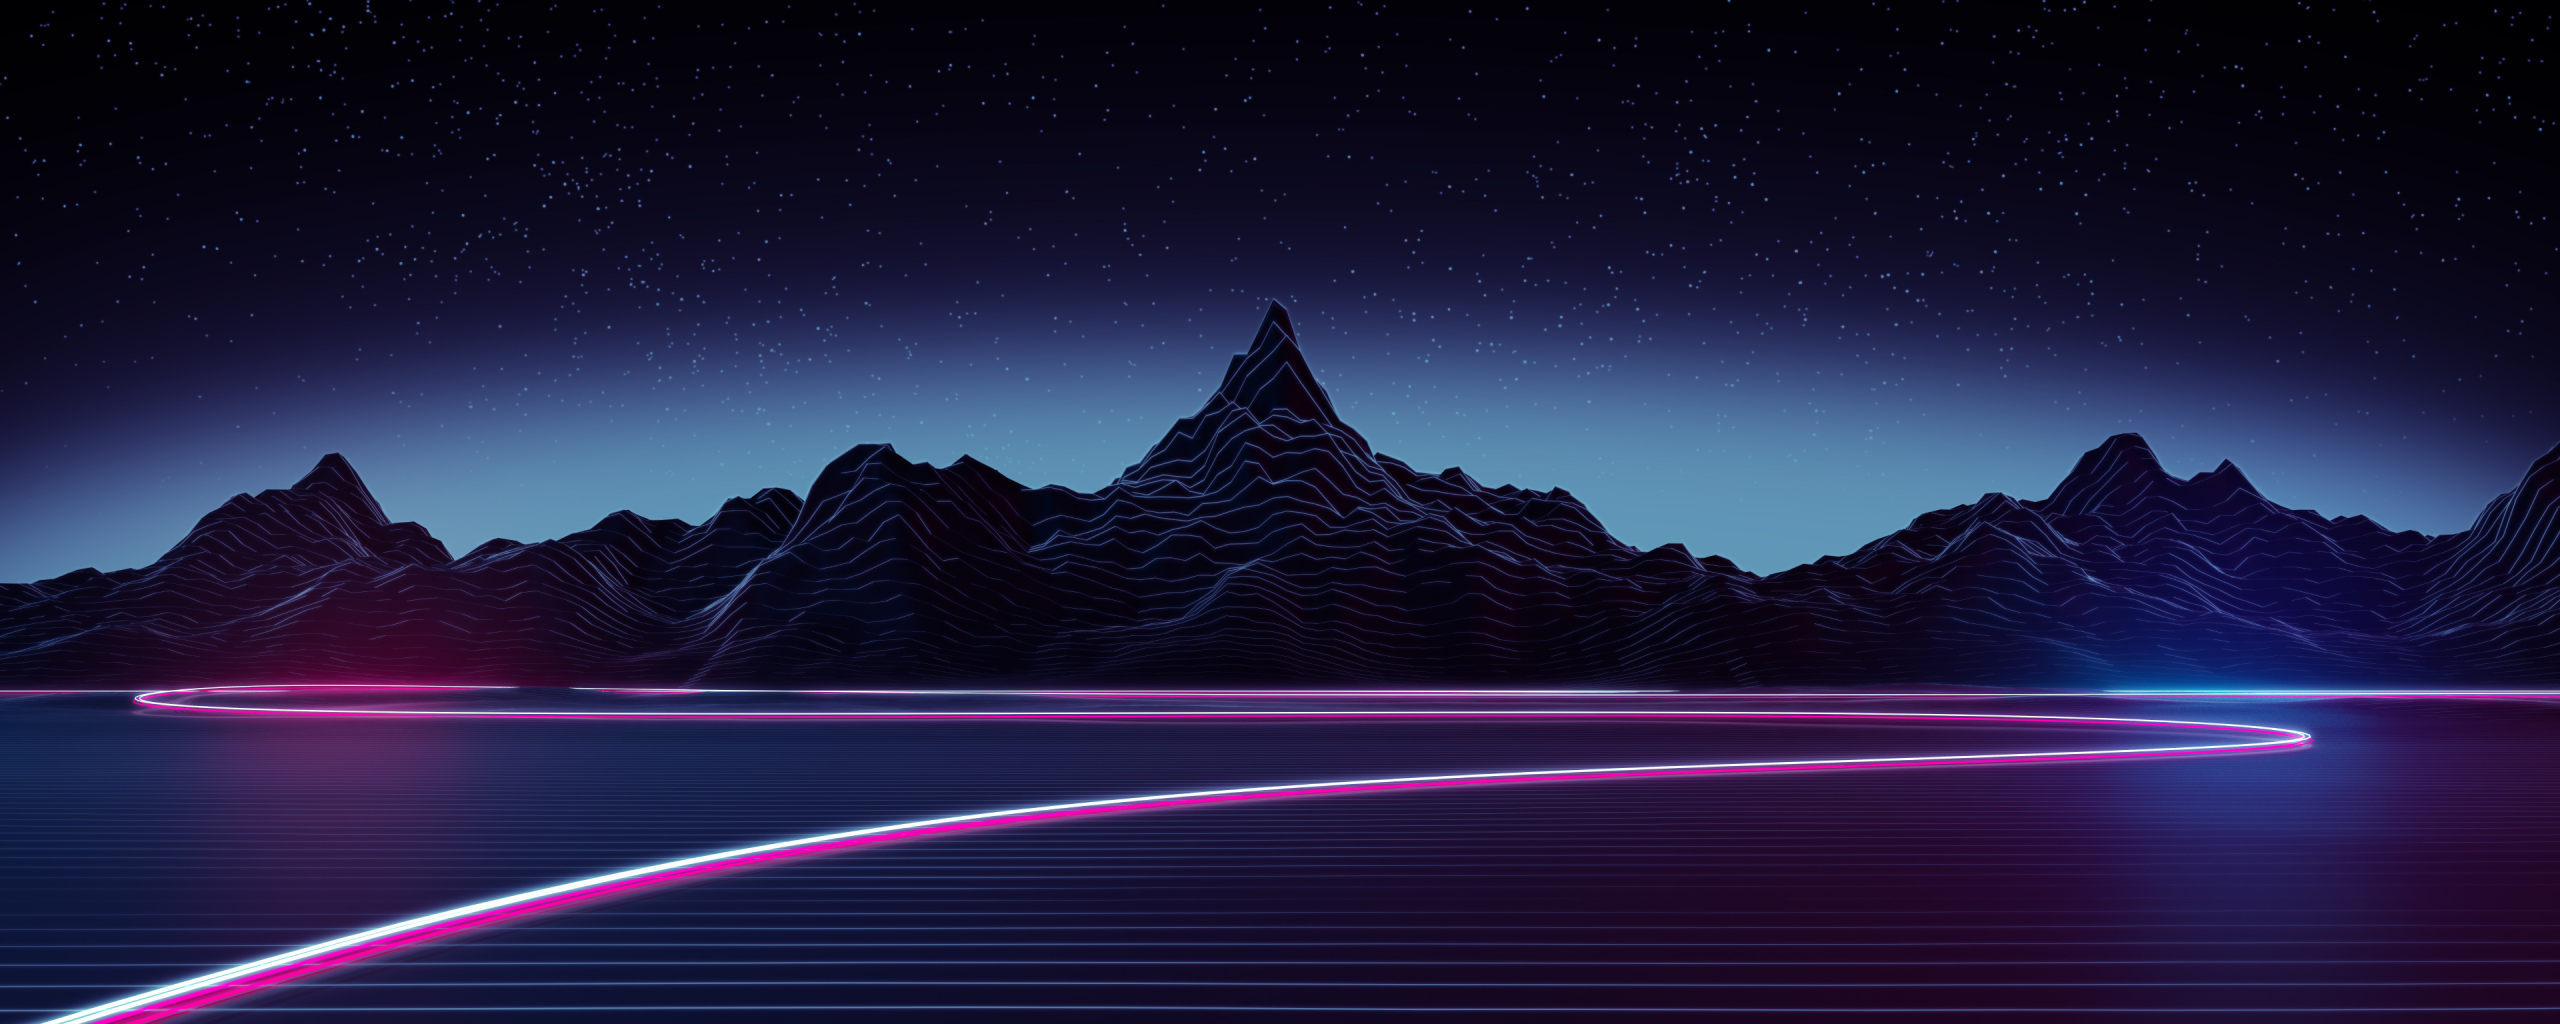 Retrowave art, dark mountains, 2560x1024 wallpaper